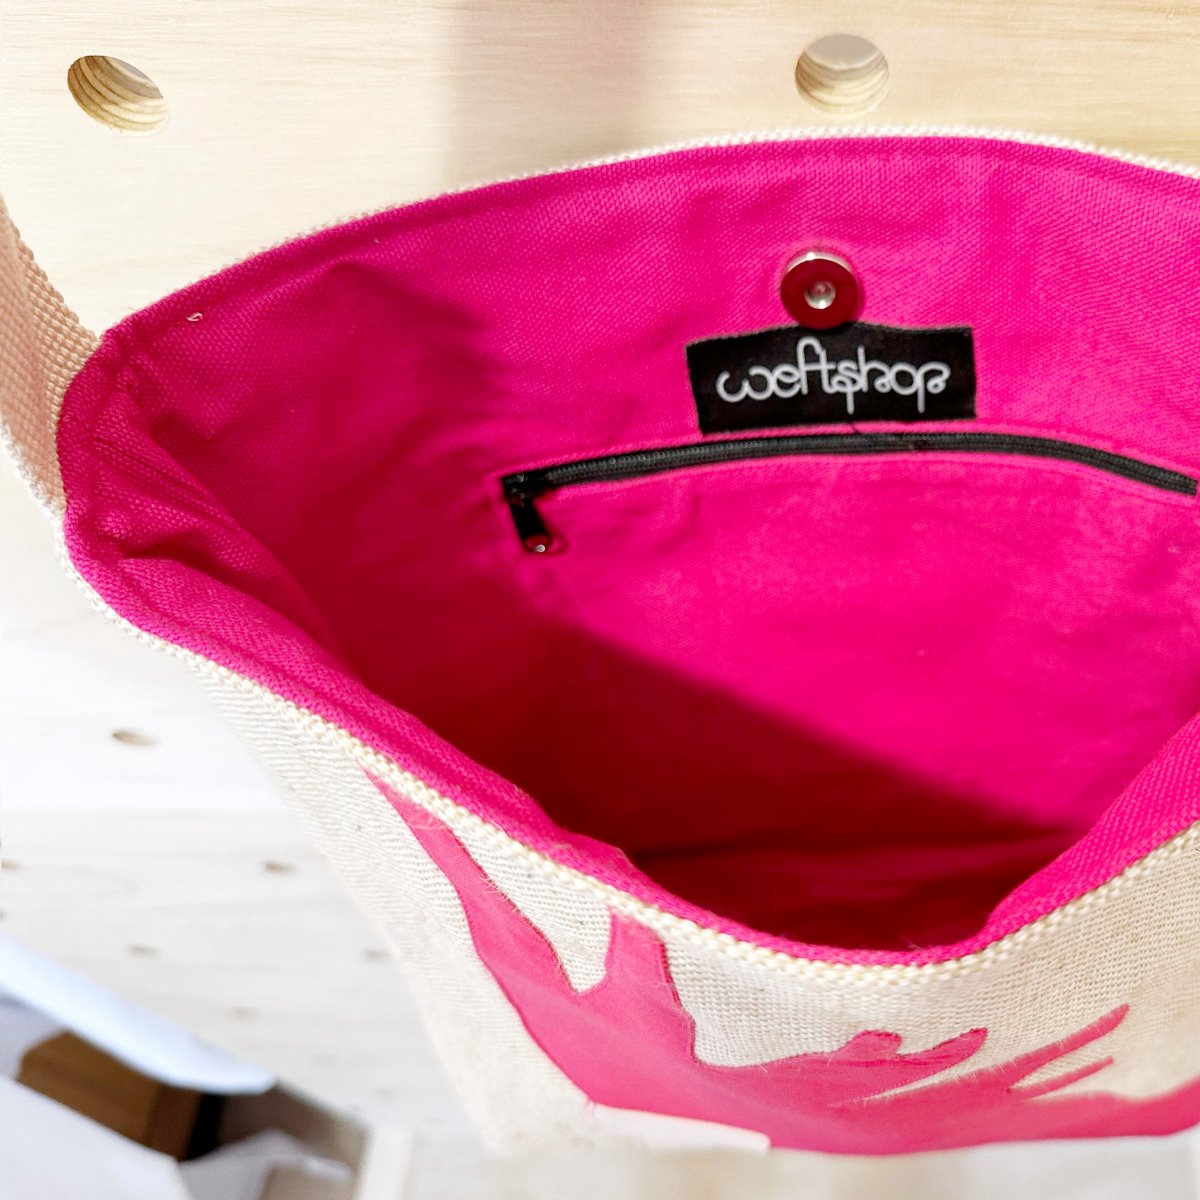 Cockatoo Crossbody Jute Shoulder Bag in Pink WEFTshop 